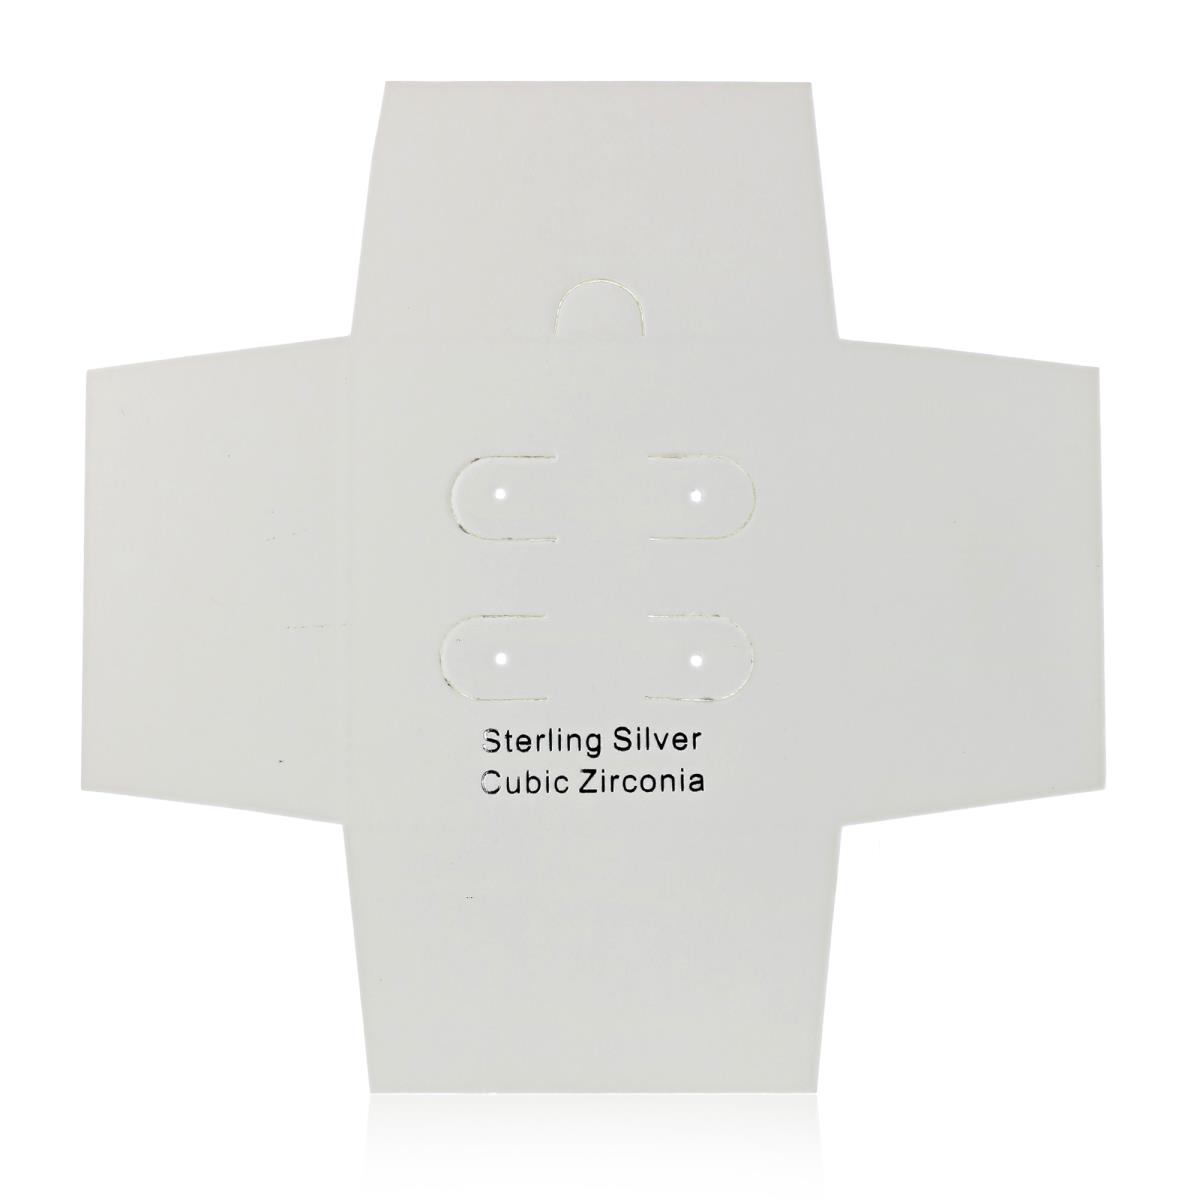 Sterling Silver Cubic Zirconia 64x64x43mm Art Paper 2 Pairs of Huggies Box Insert